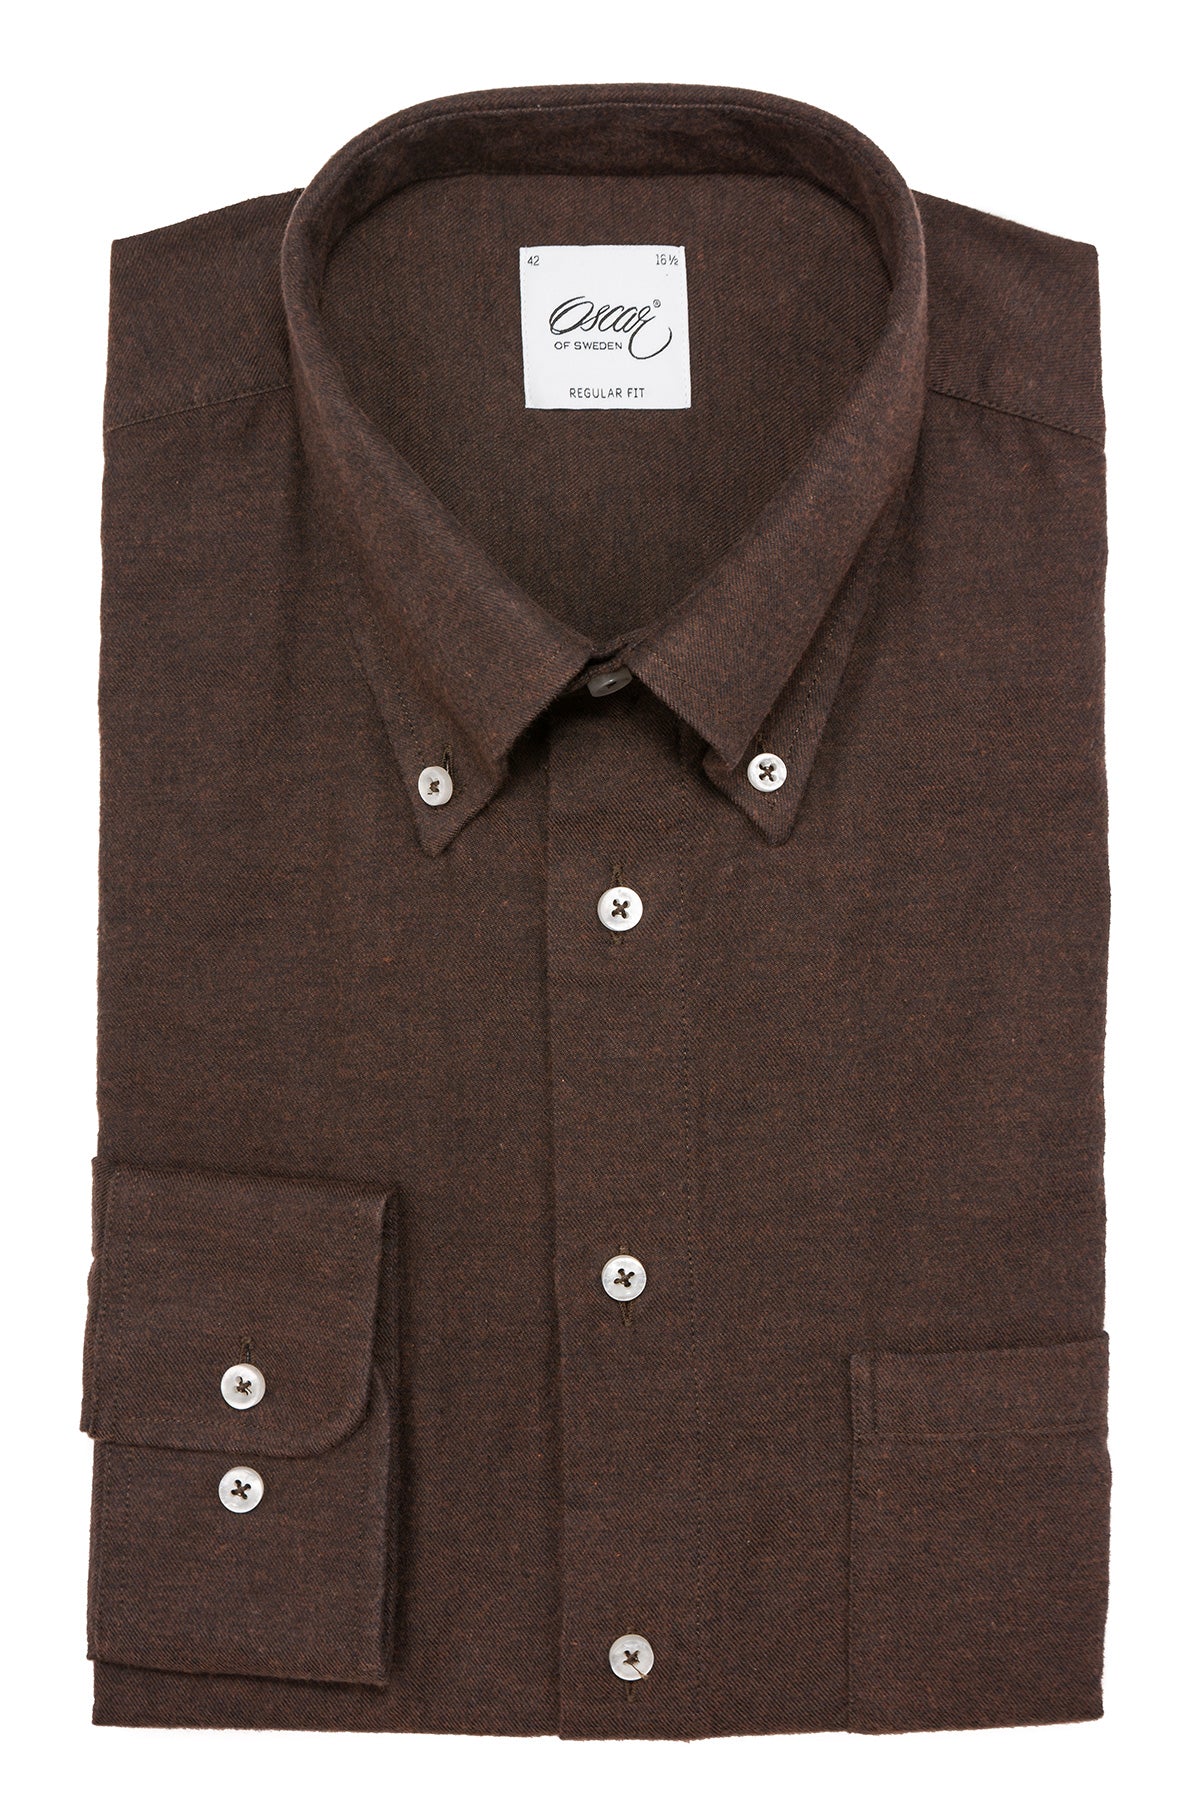 Brown flannel button down regular fit shirt